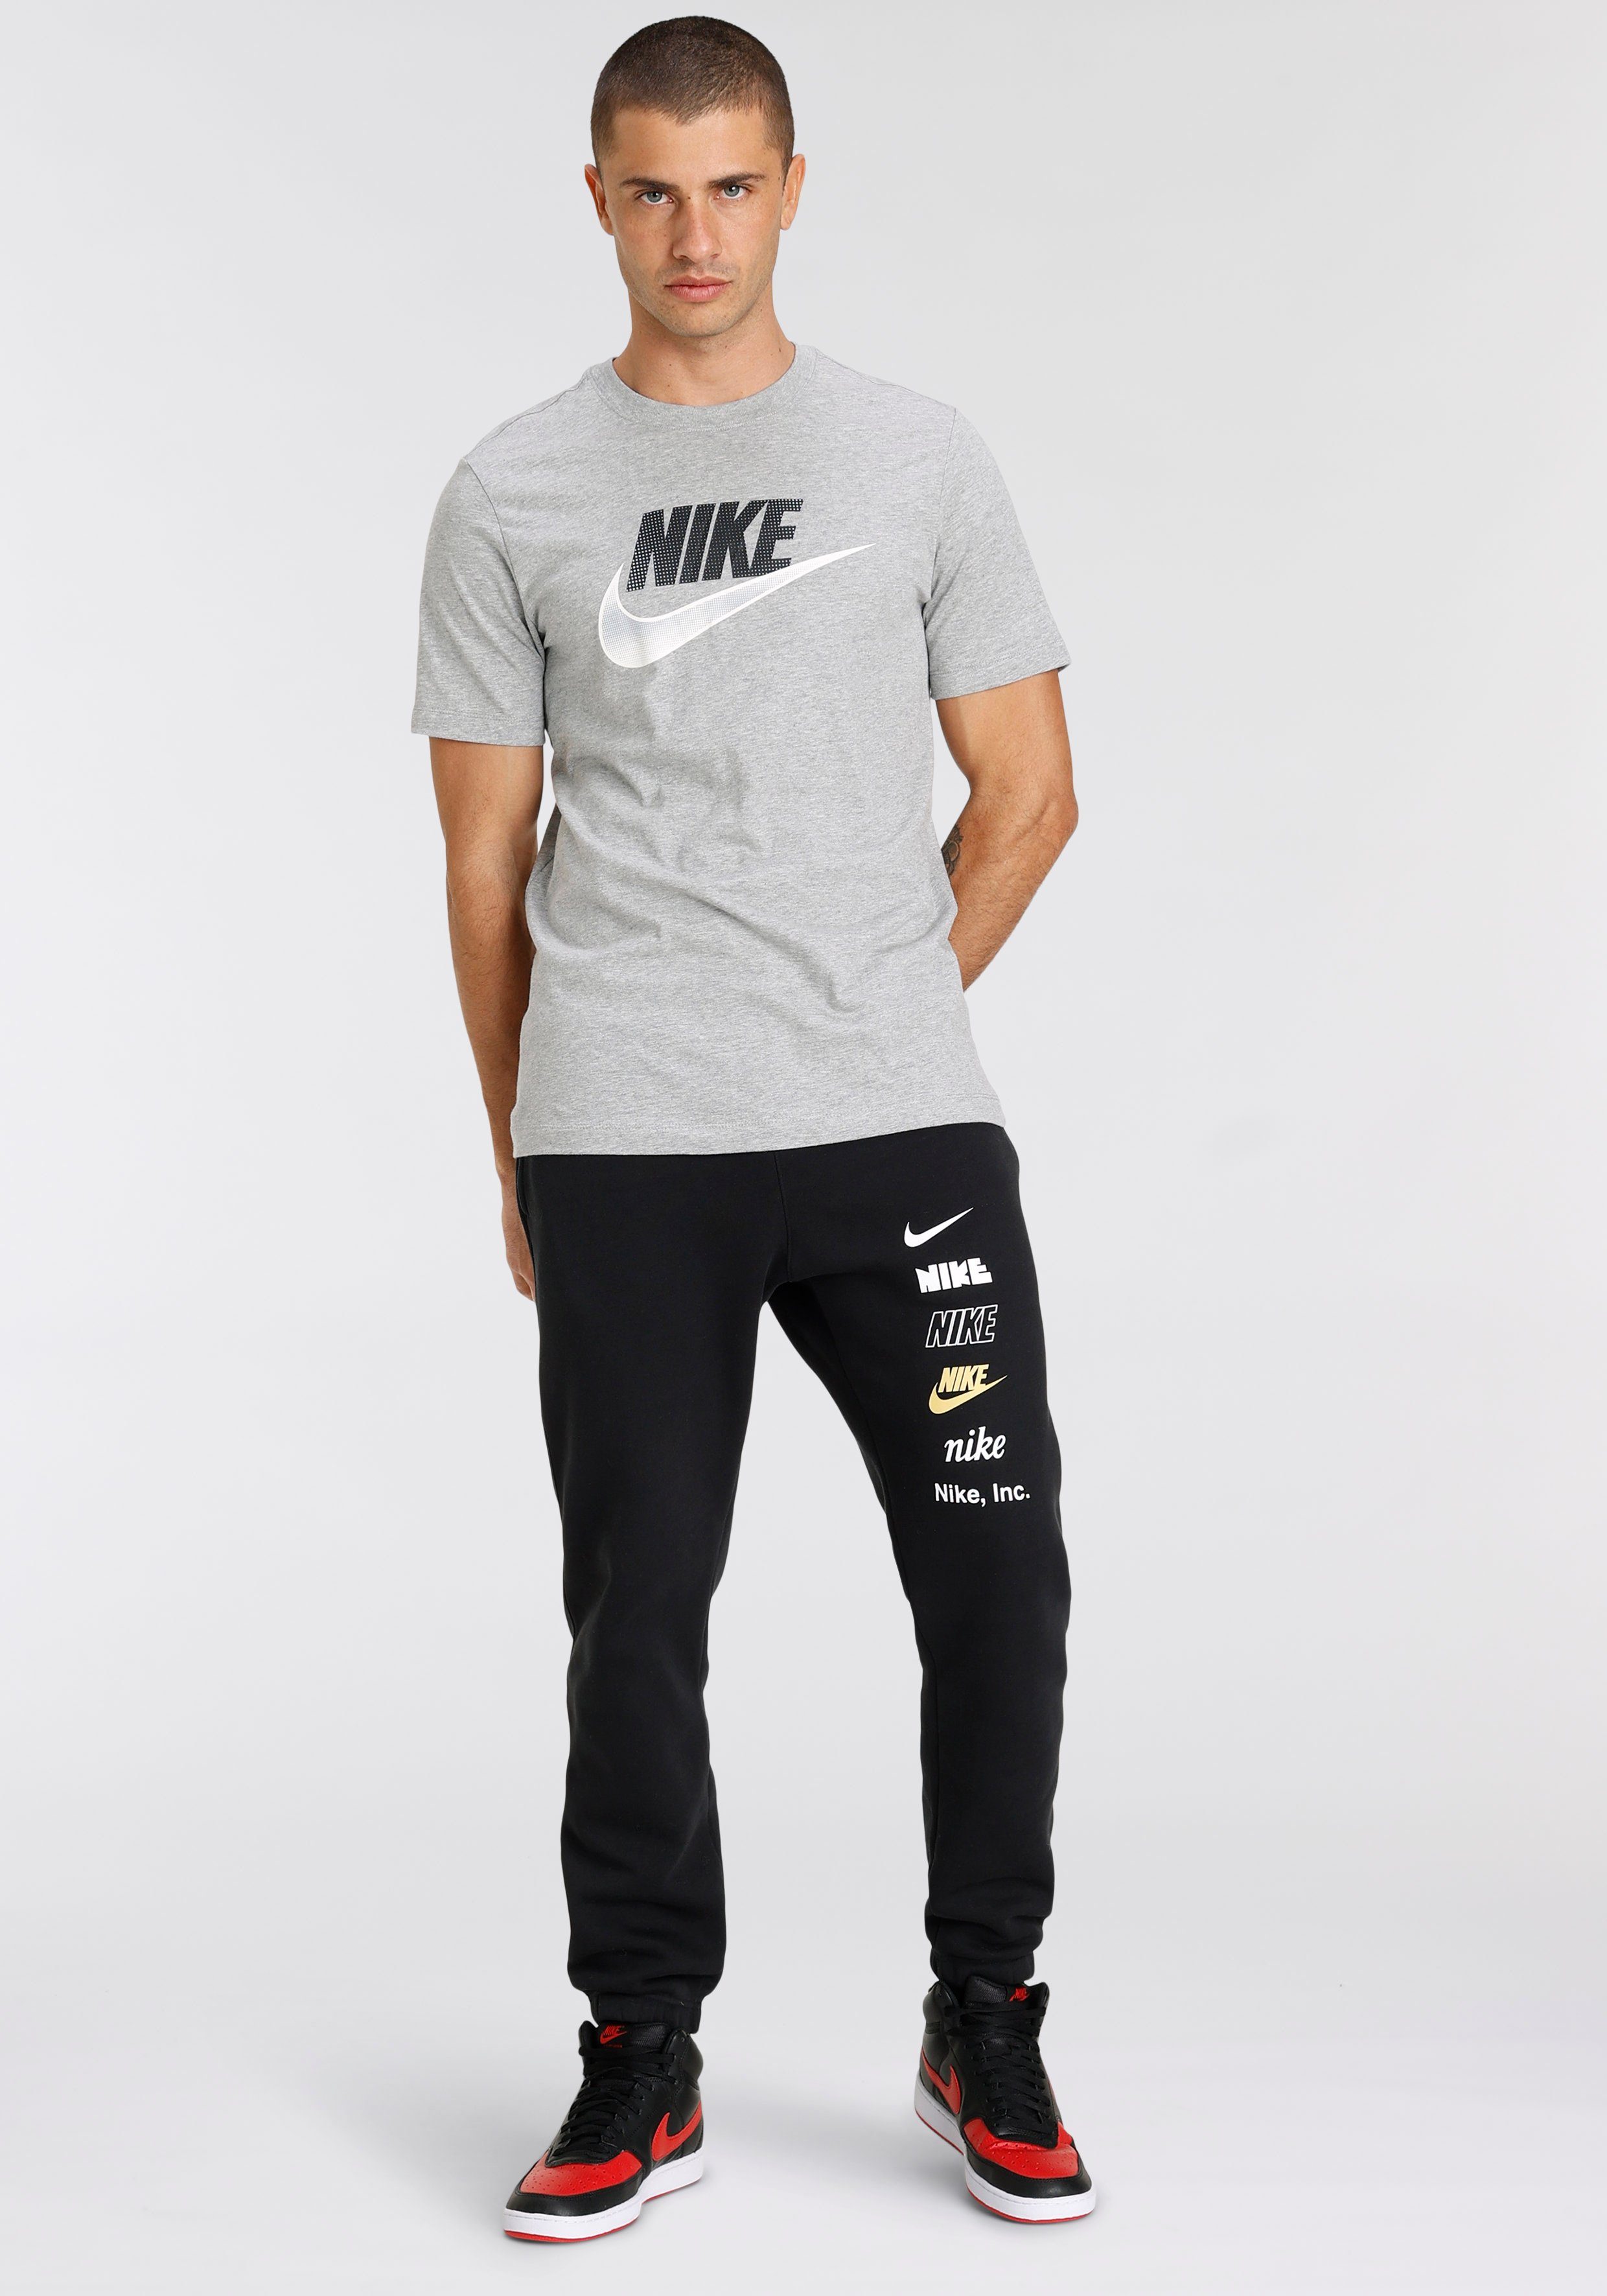 Nike Sportswear T-Shirt Men's T-Shirt DK GREY HEATHER | Sport-T-Shirts